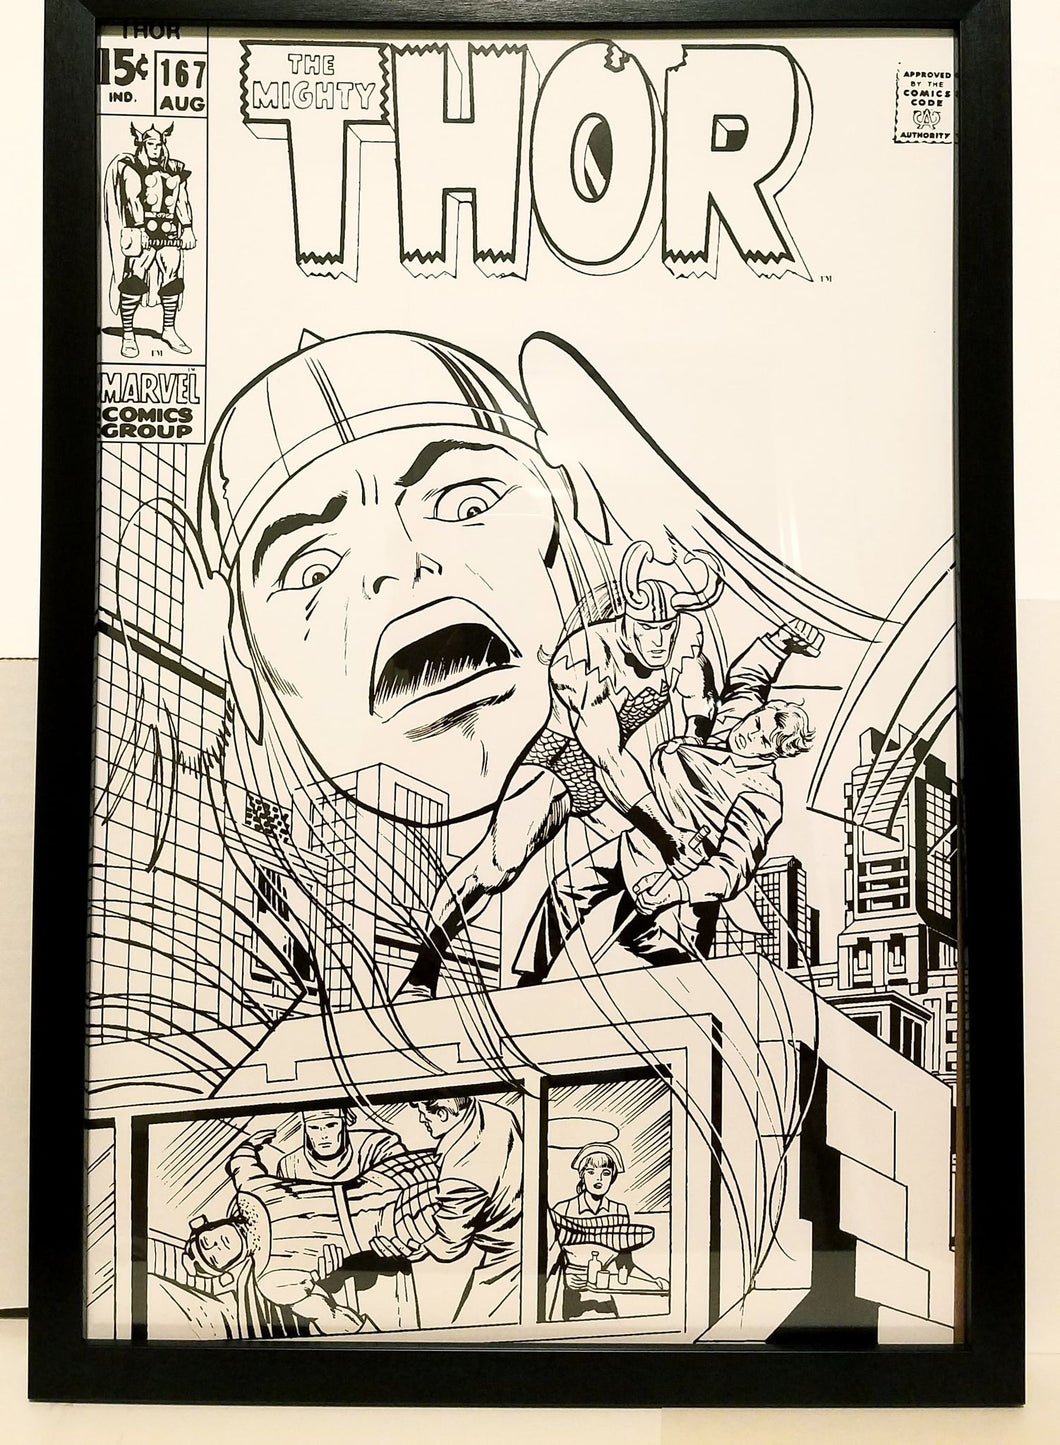 Thor #167 Variant by Jack Kirby 12x18 FRAMED Marvel Comics Vintage Art Print Poster